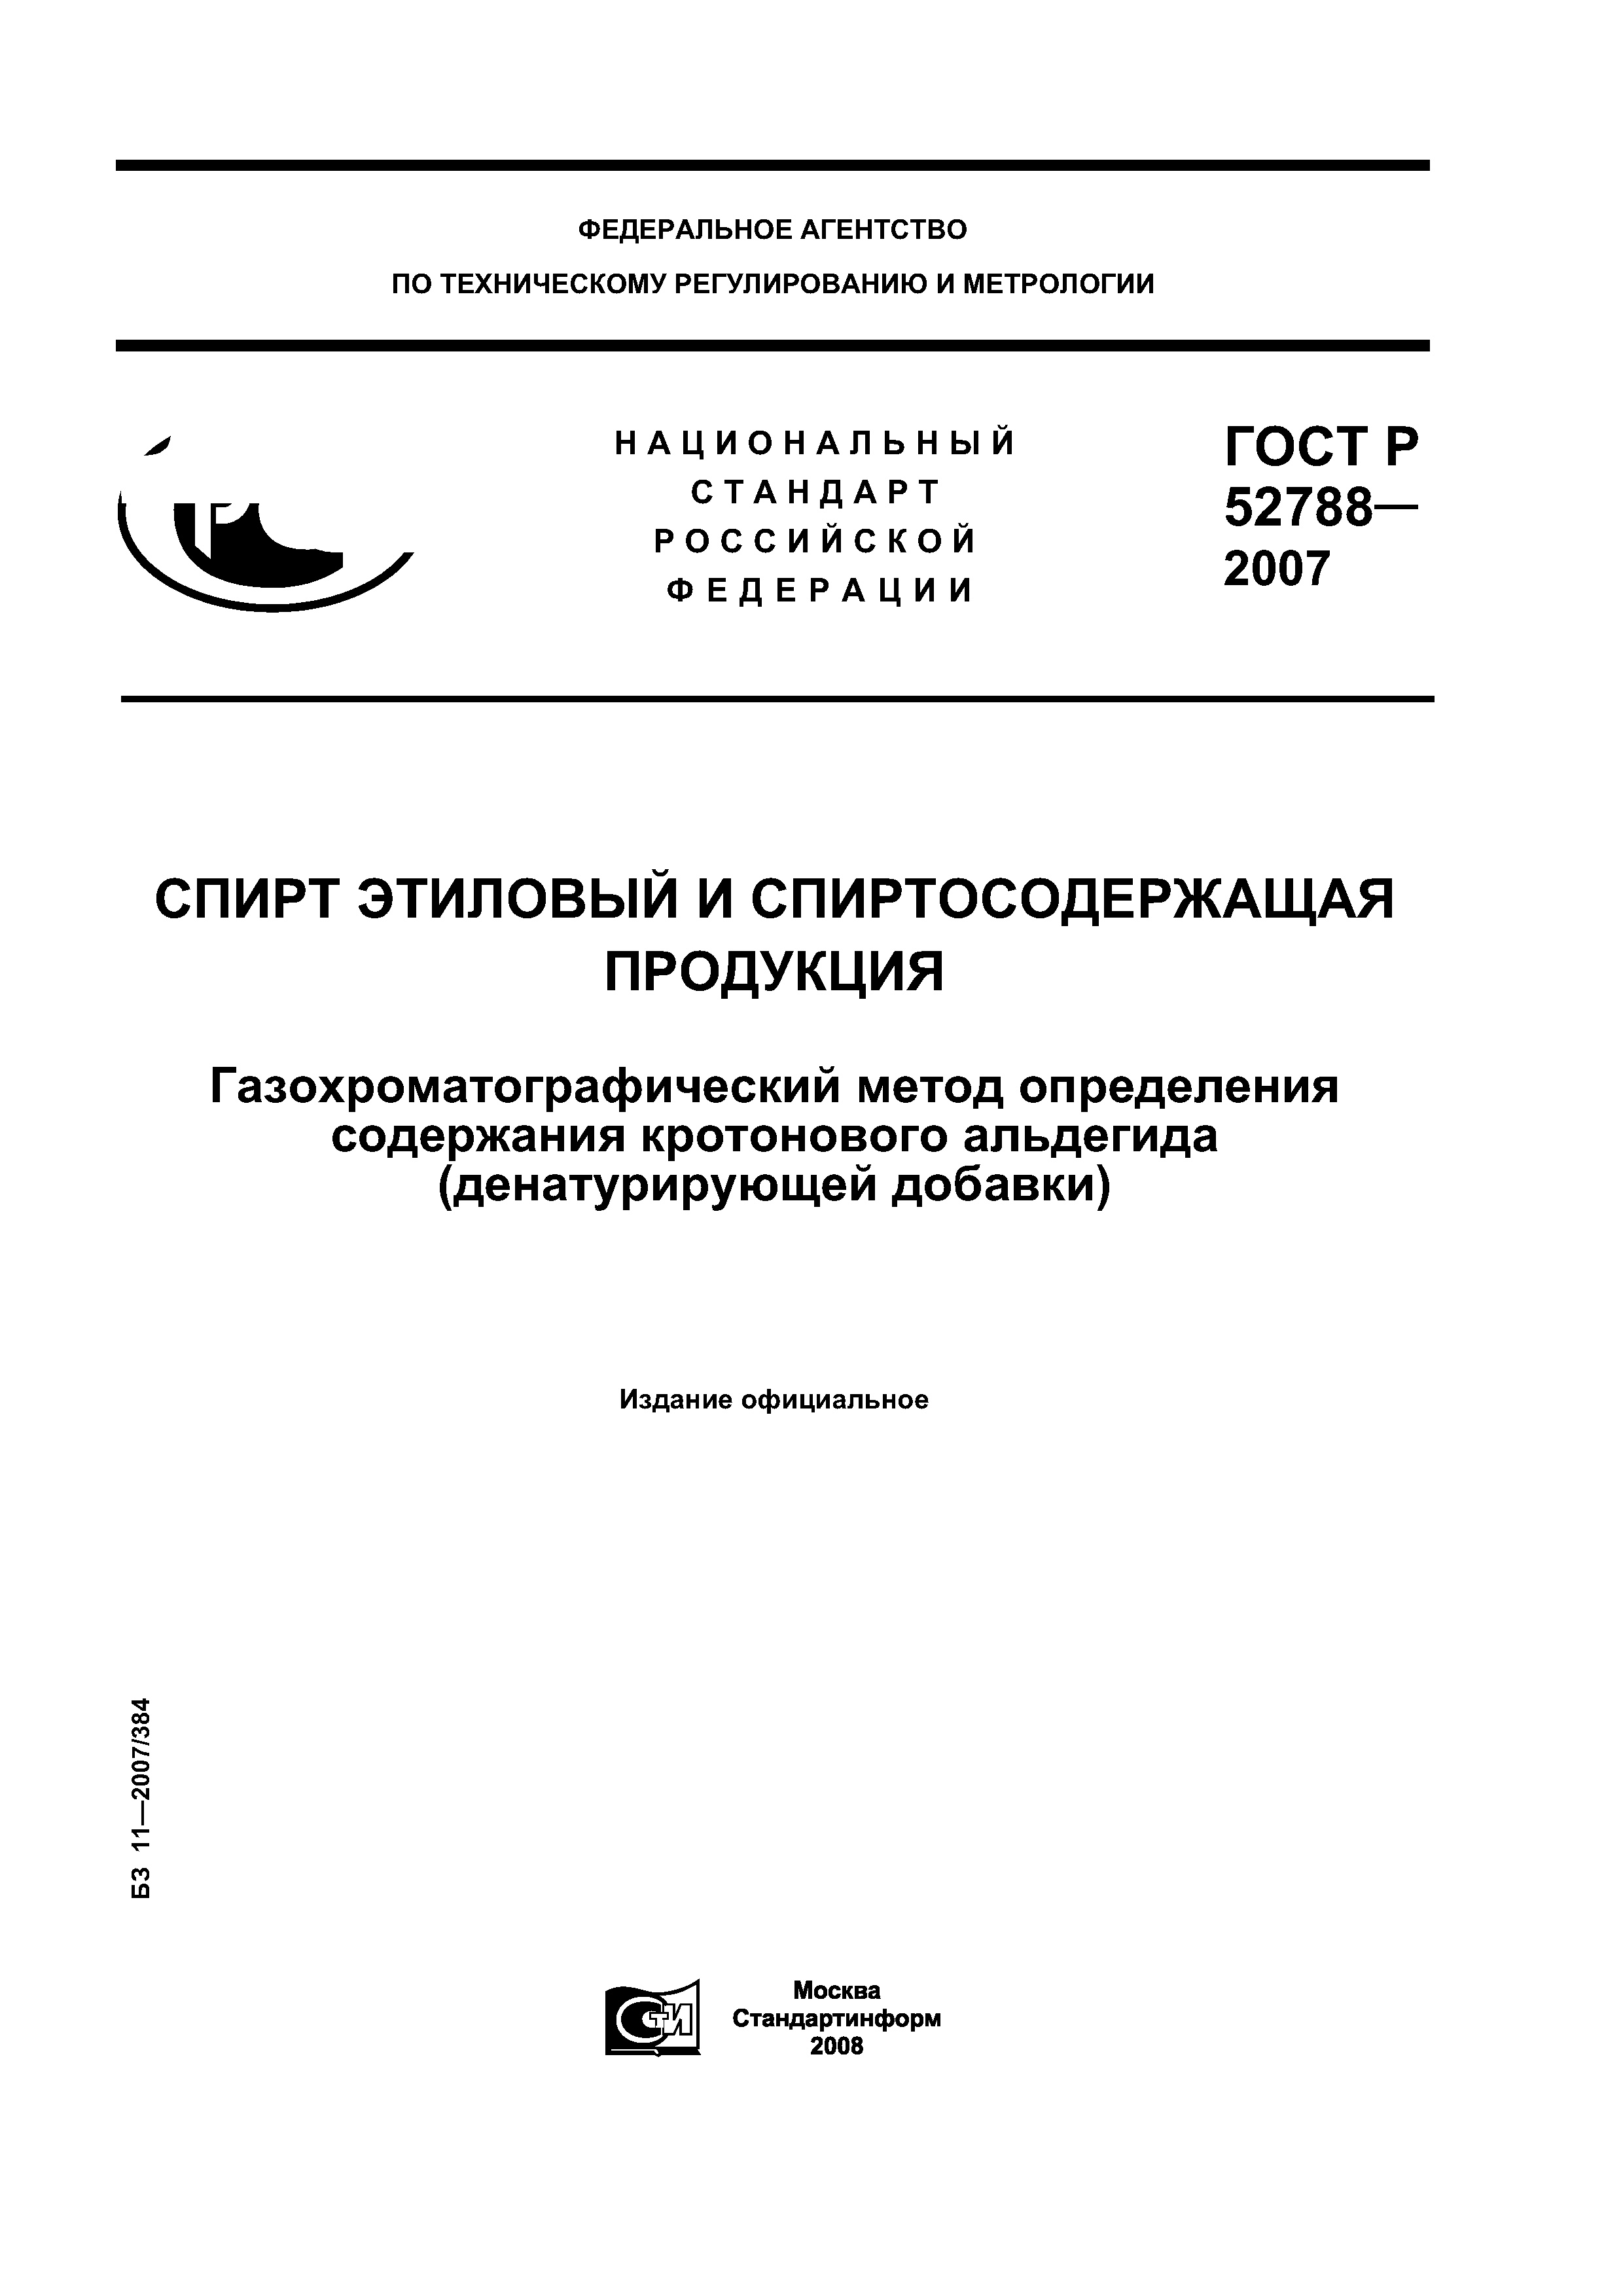 ГОСТ Р 52788-2007